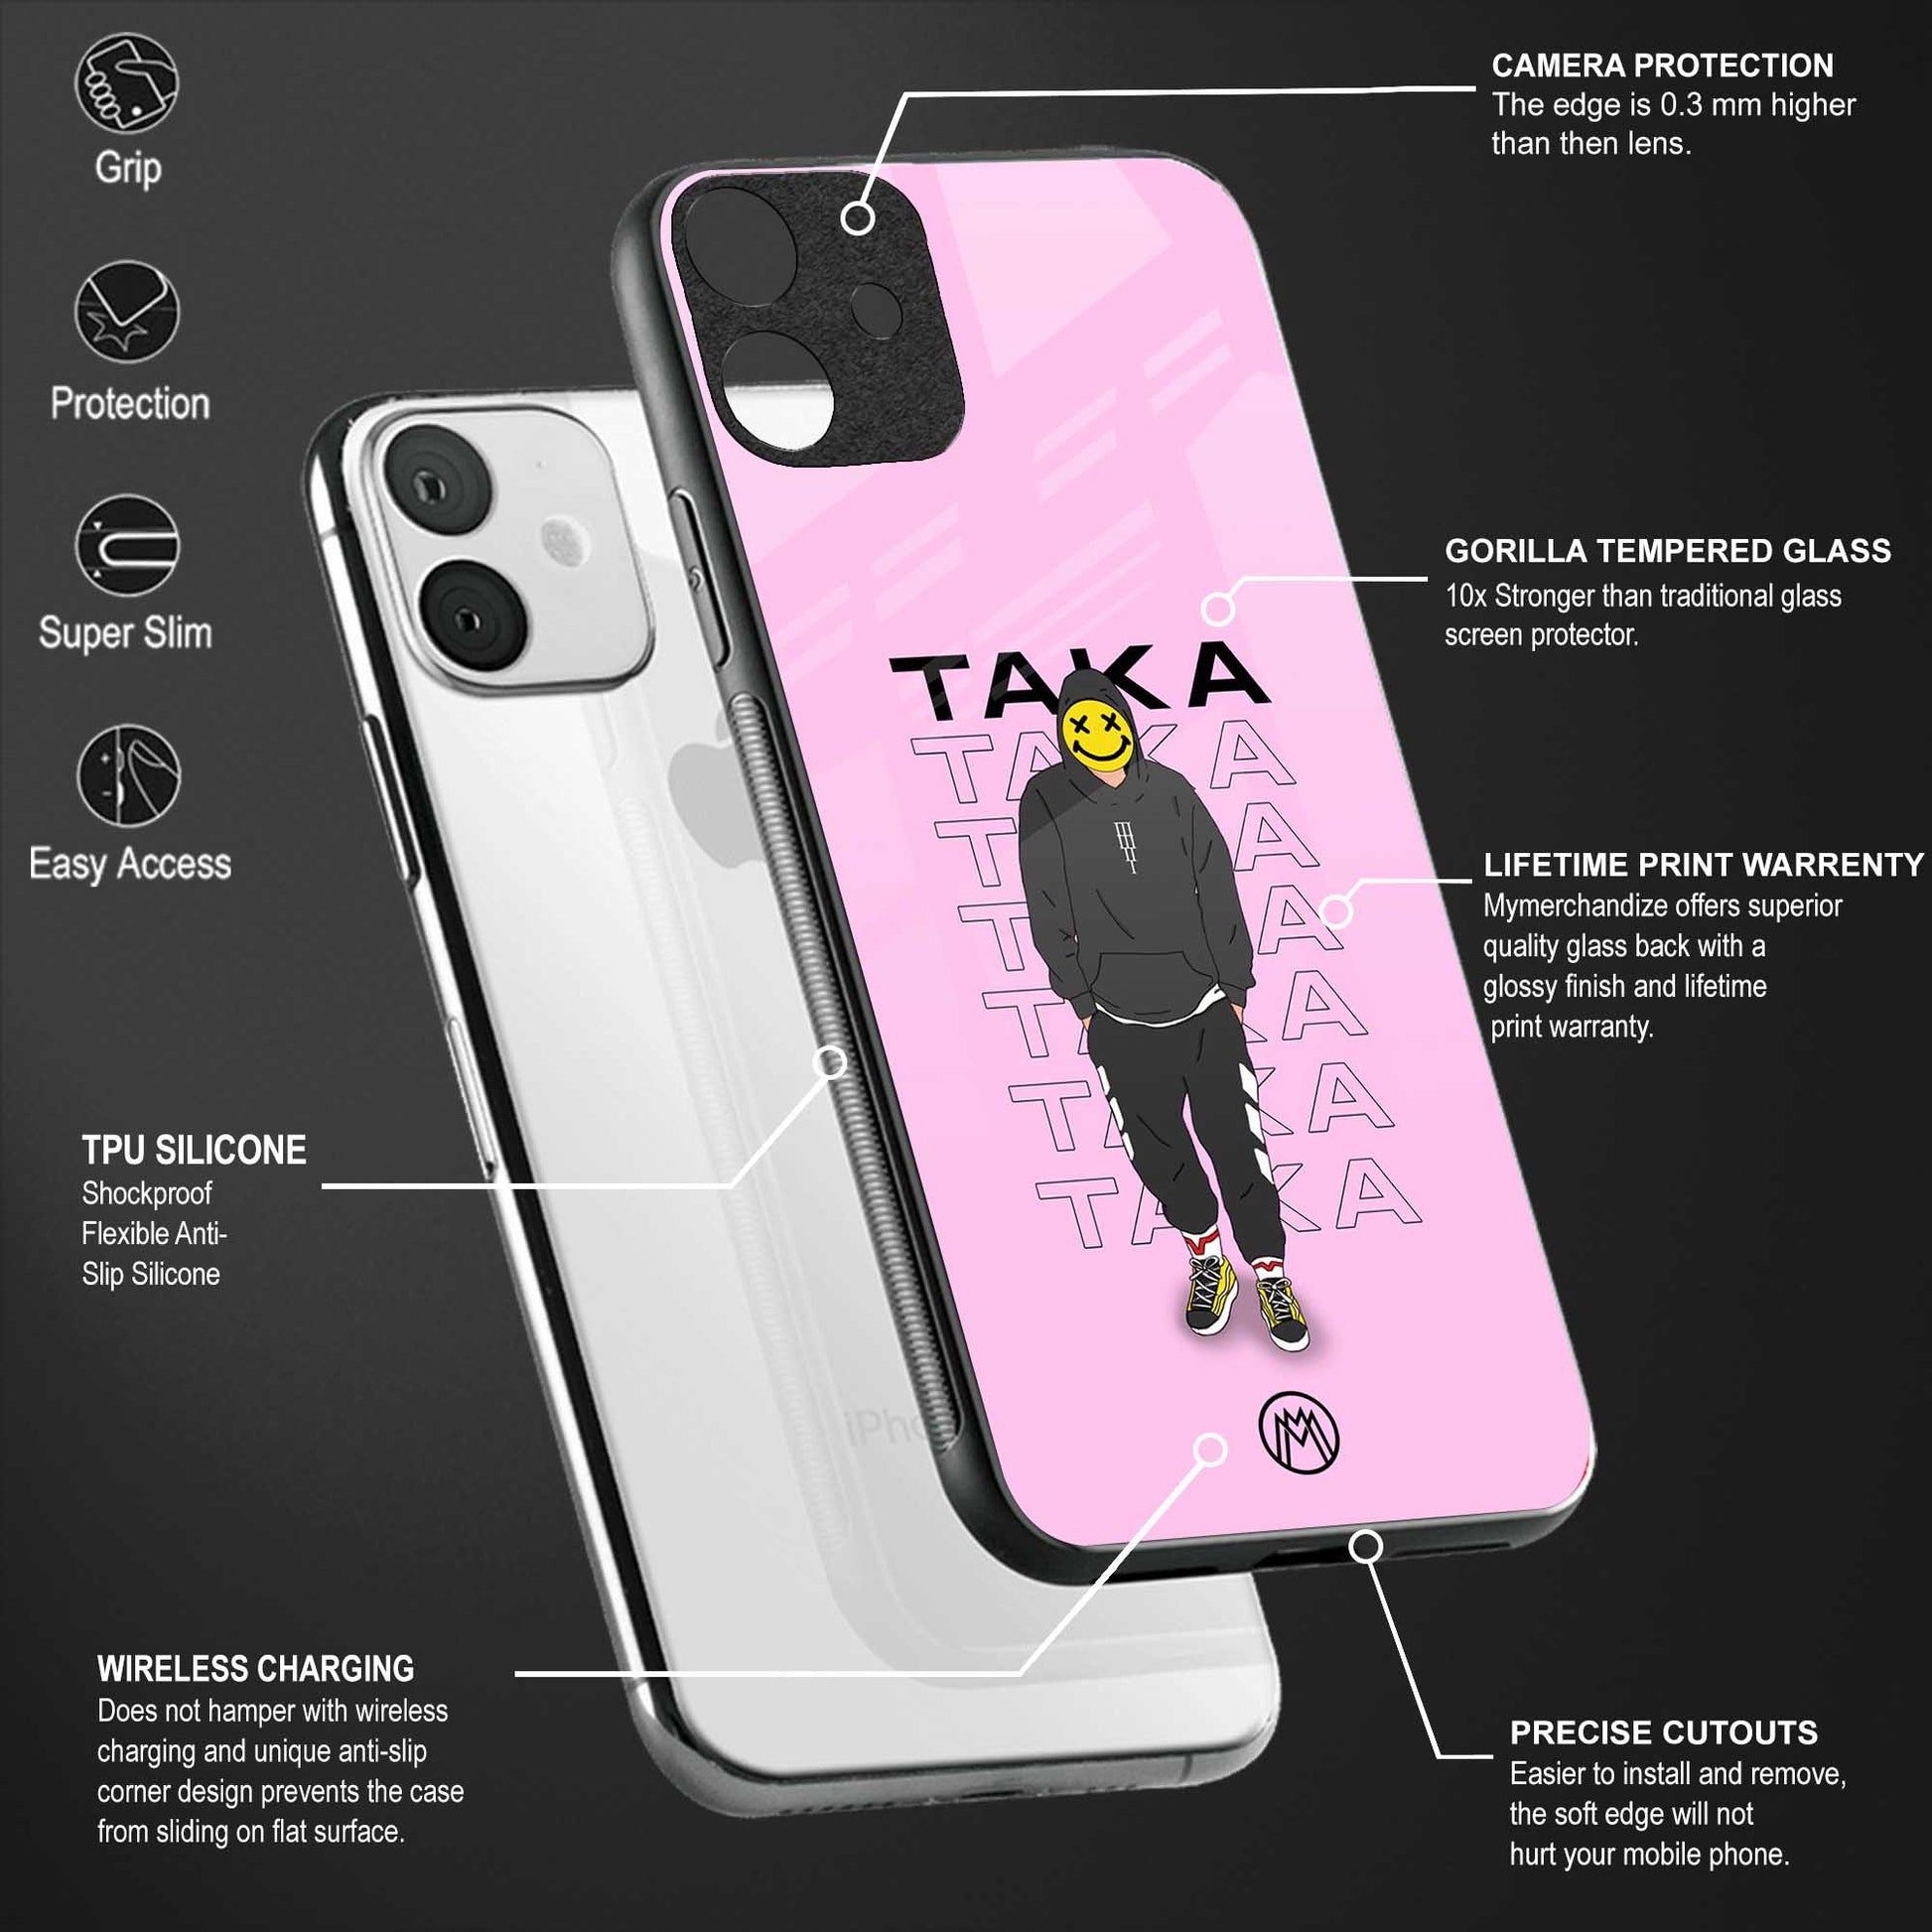 taka taka glass case for oppo f19 pro image-4